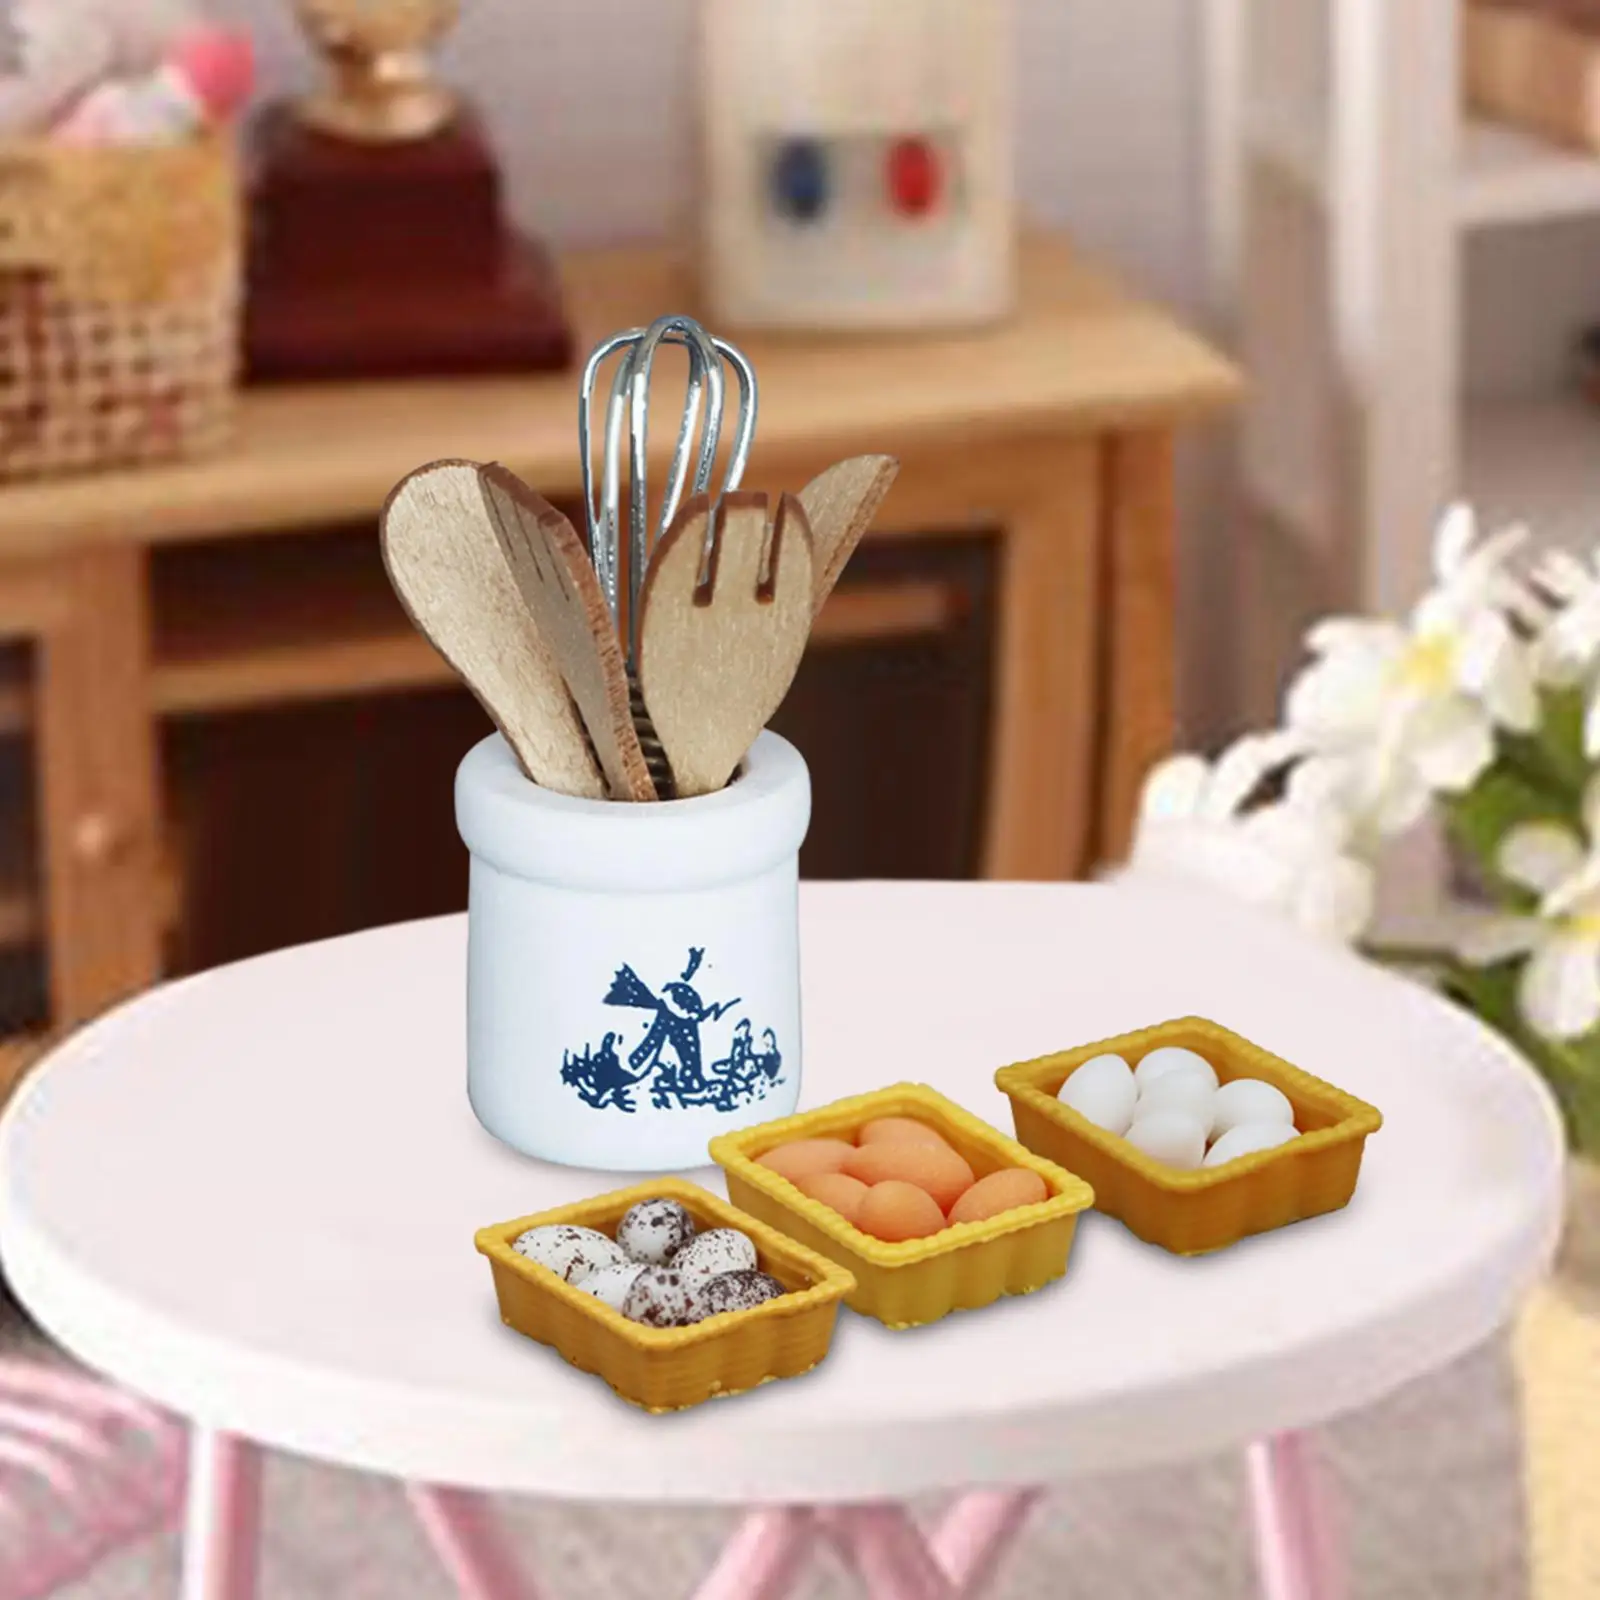 Dollhouse Kitchen Utensils Micro Landscape 1:12 Scale Miniature Baking Tools